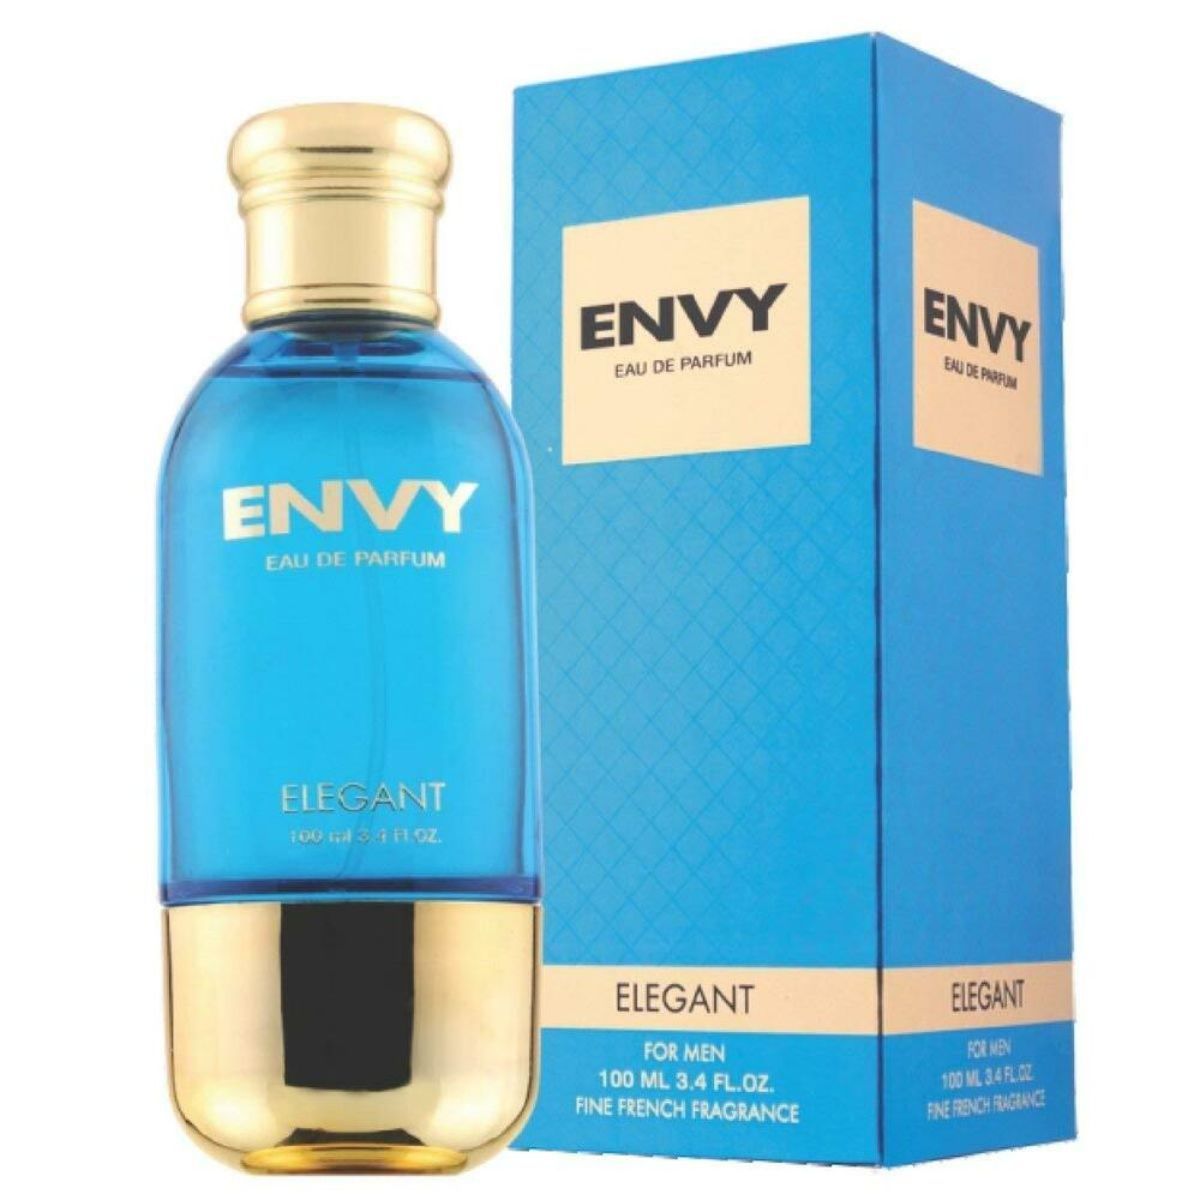 Envy Elegant Perfume